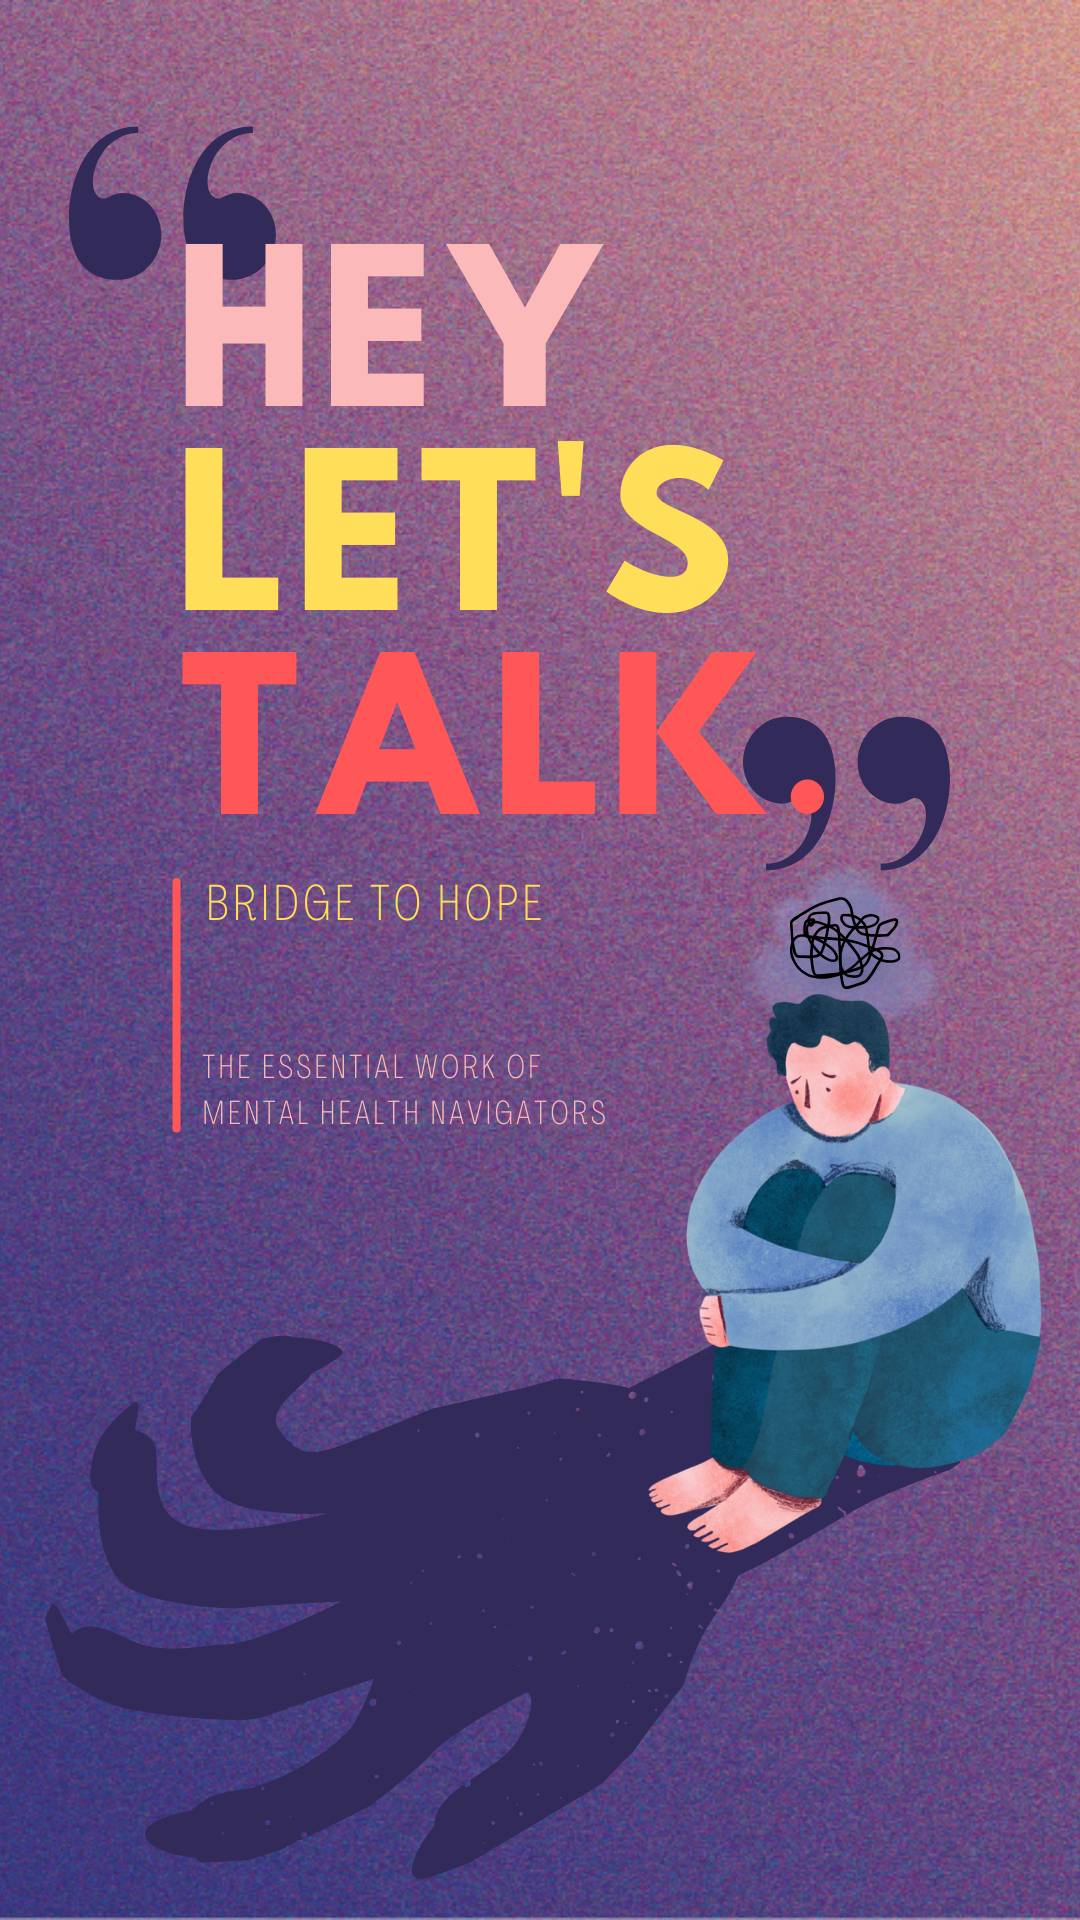 Bridge to Hope: The Vital Role of Mental Health Navigator